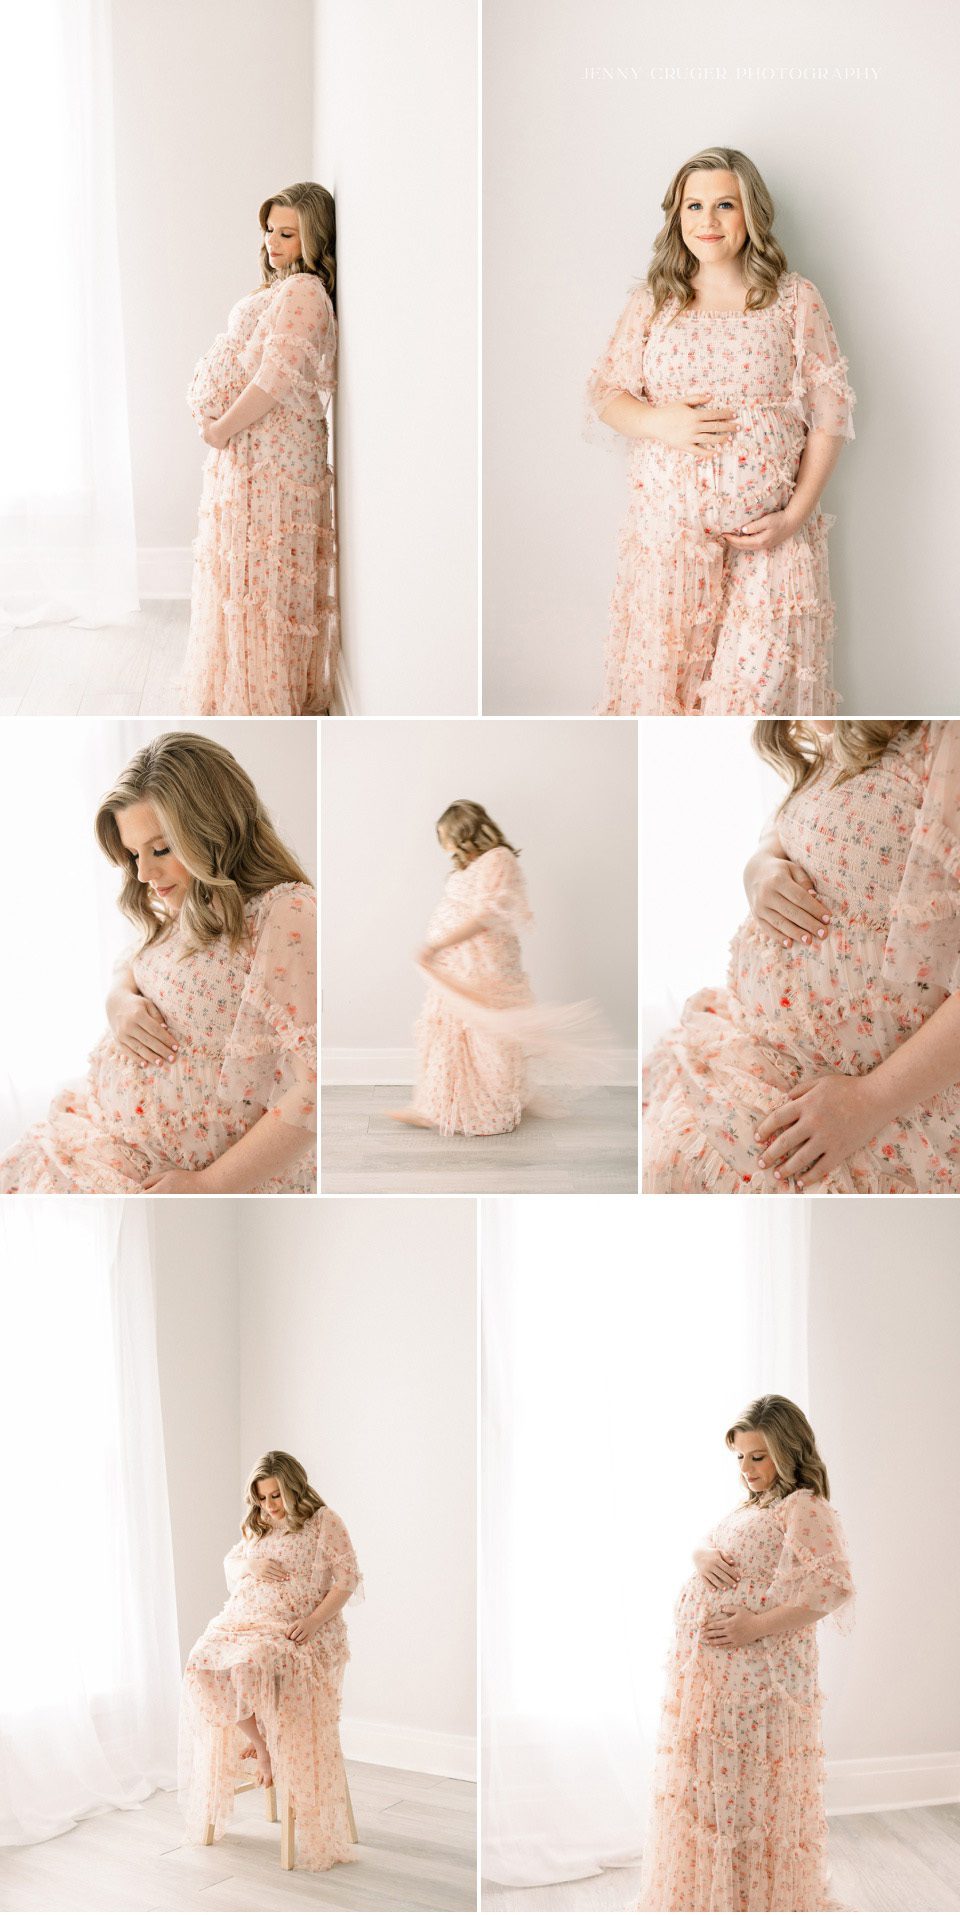 Franklin maternity photographer 